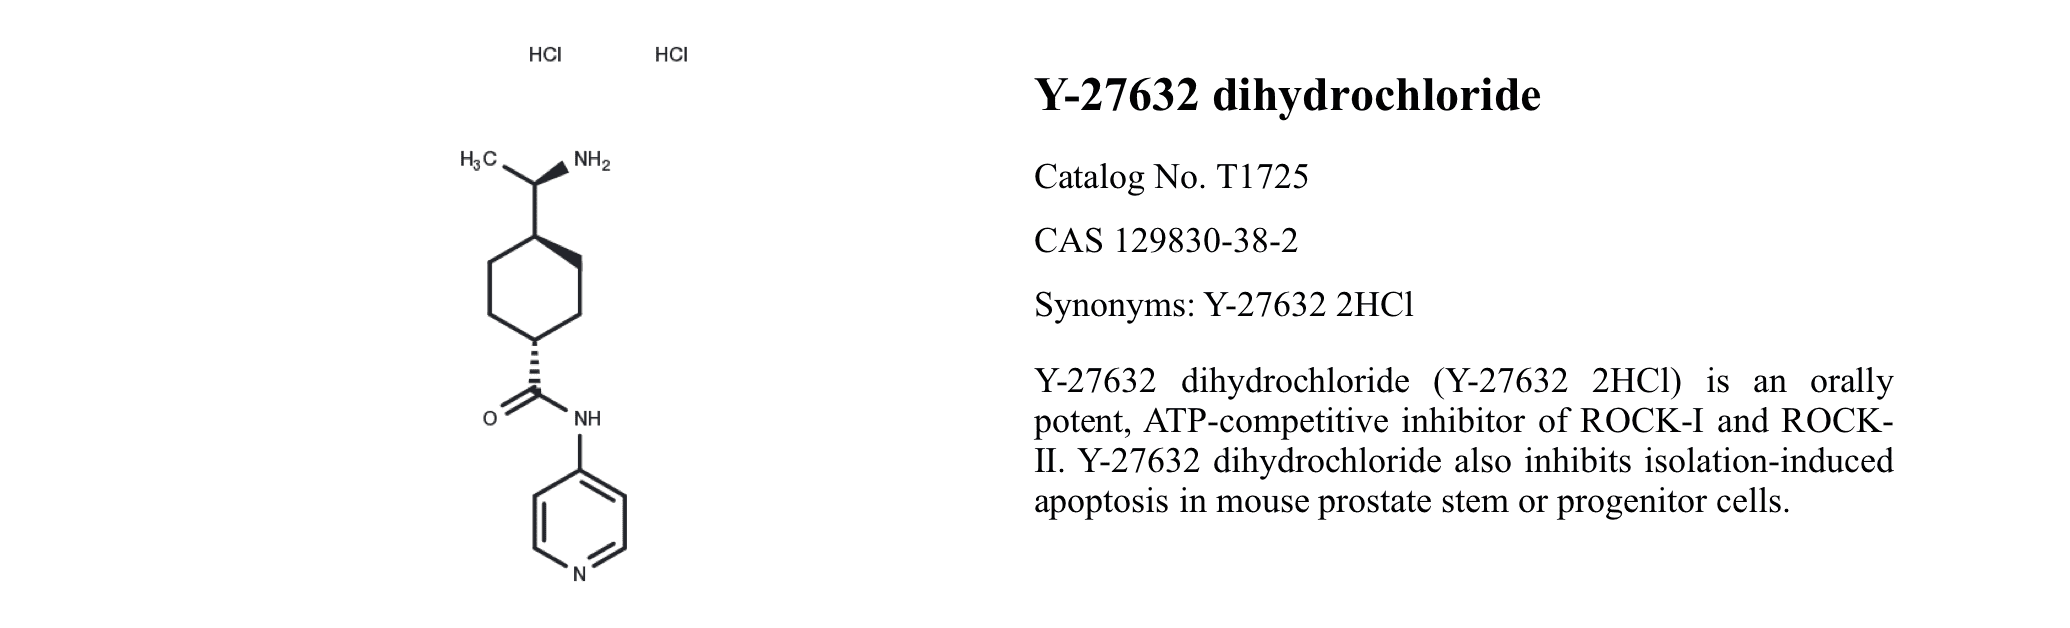 WIKIMOLE—Y-27632 & Y-27632 2HCl